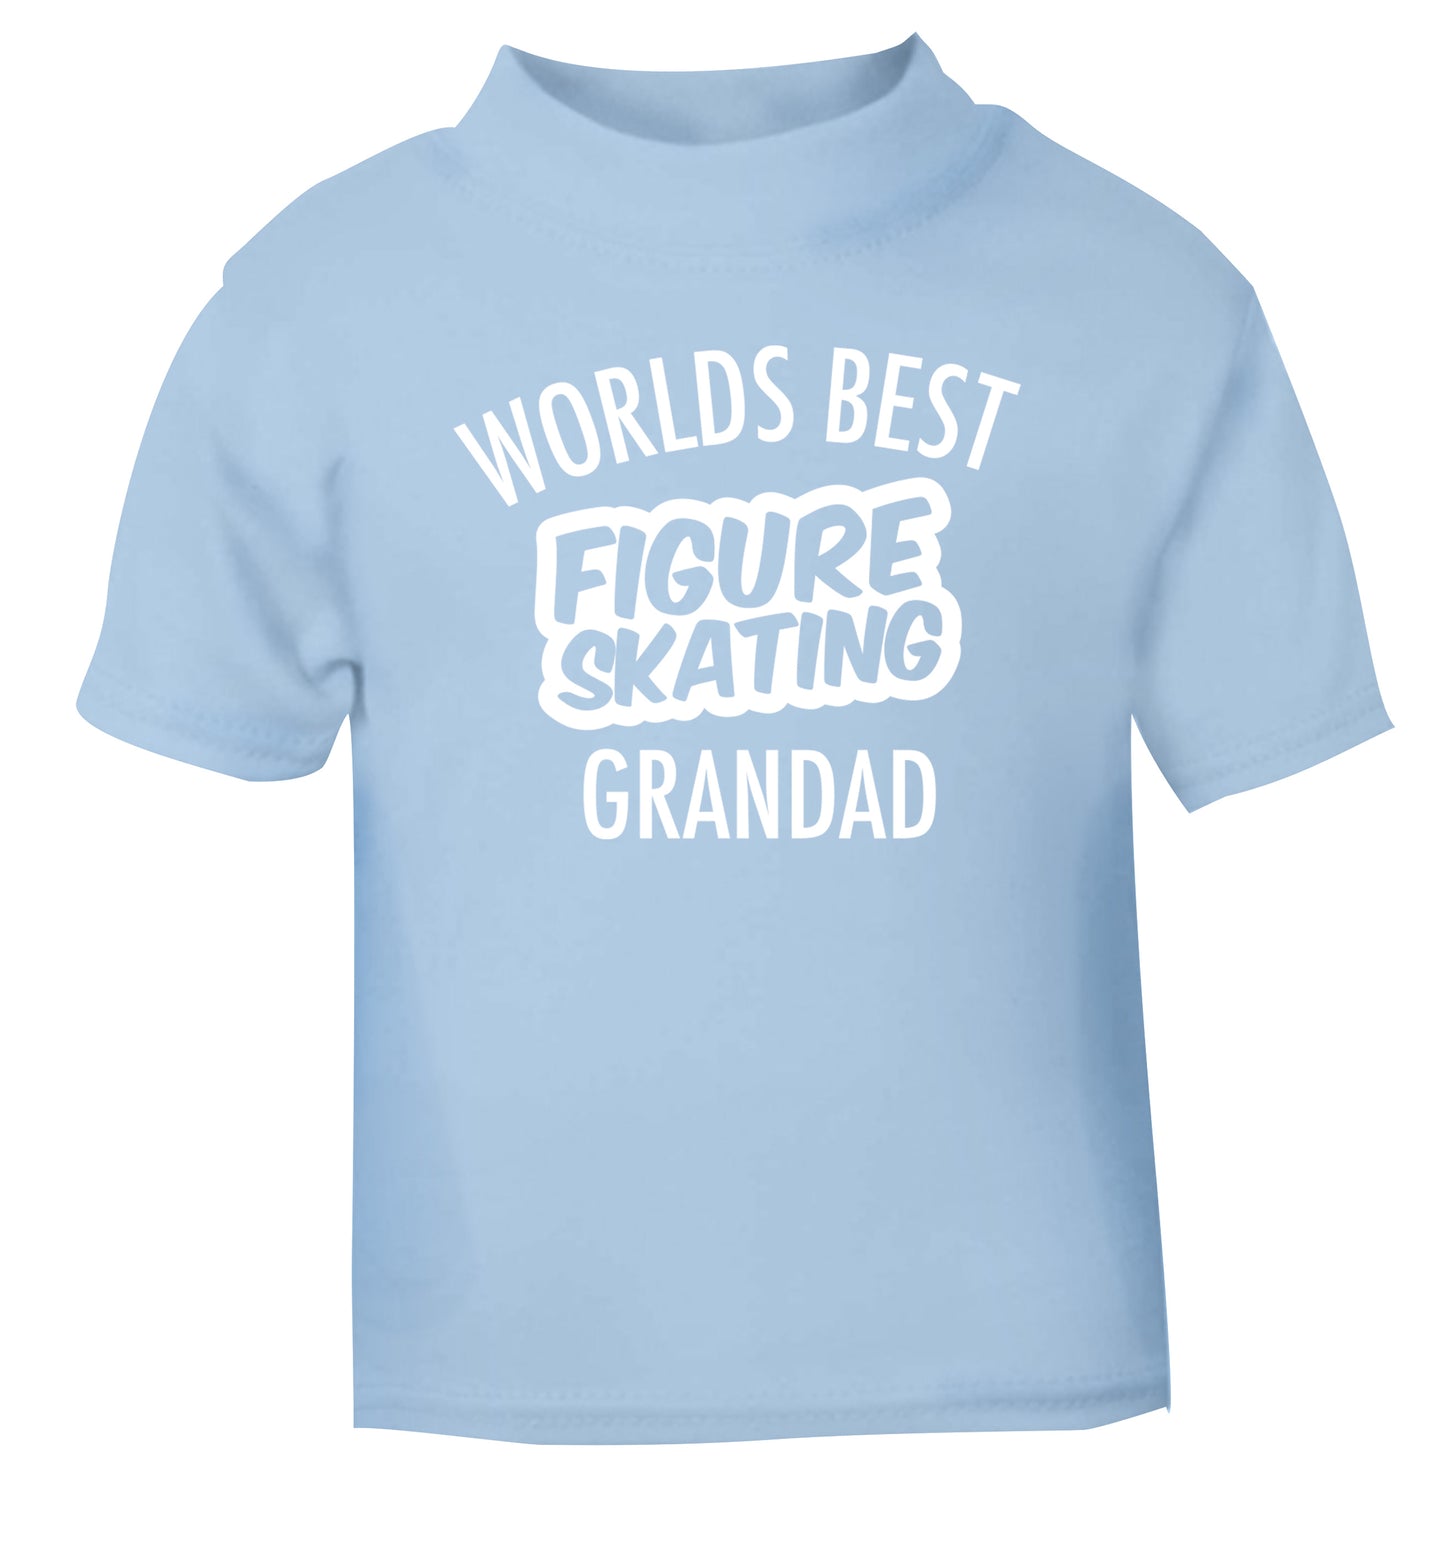 Worlds best figure skating grandad light blue Baby Toddler Tshirt 2 Years